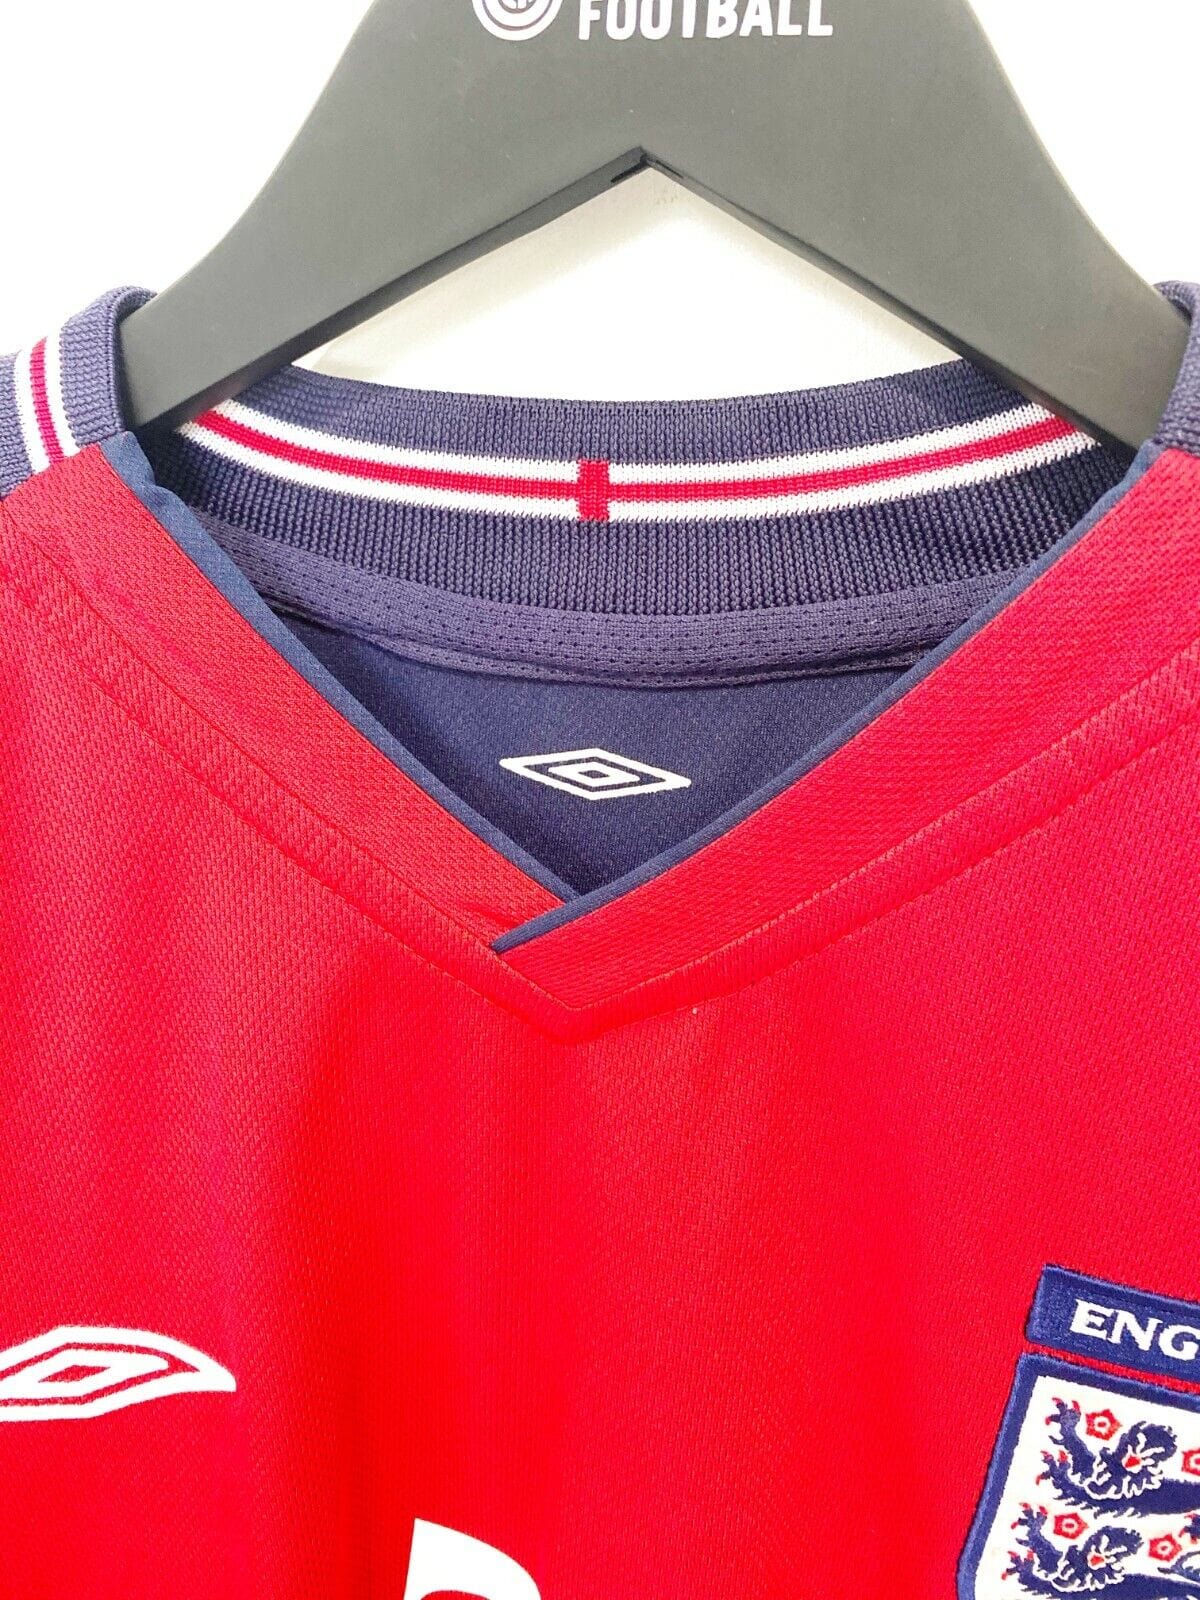 2002 WC BECKHAM #7 England Vintage Umbro LS Away Football Shirt 